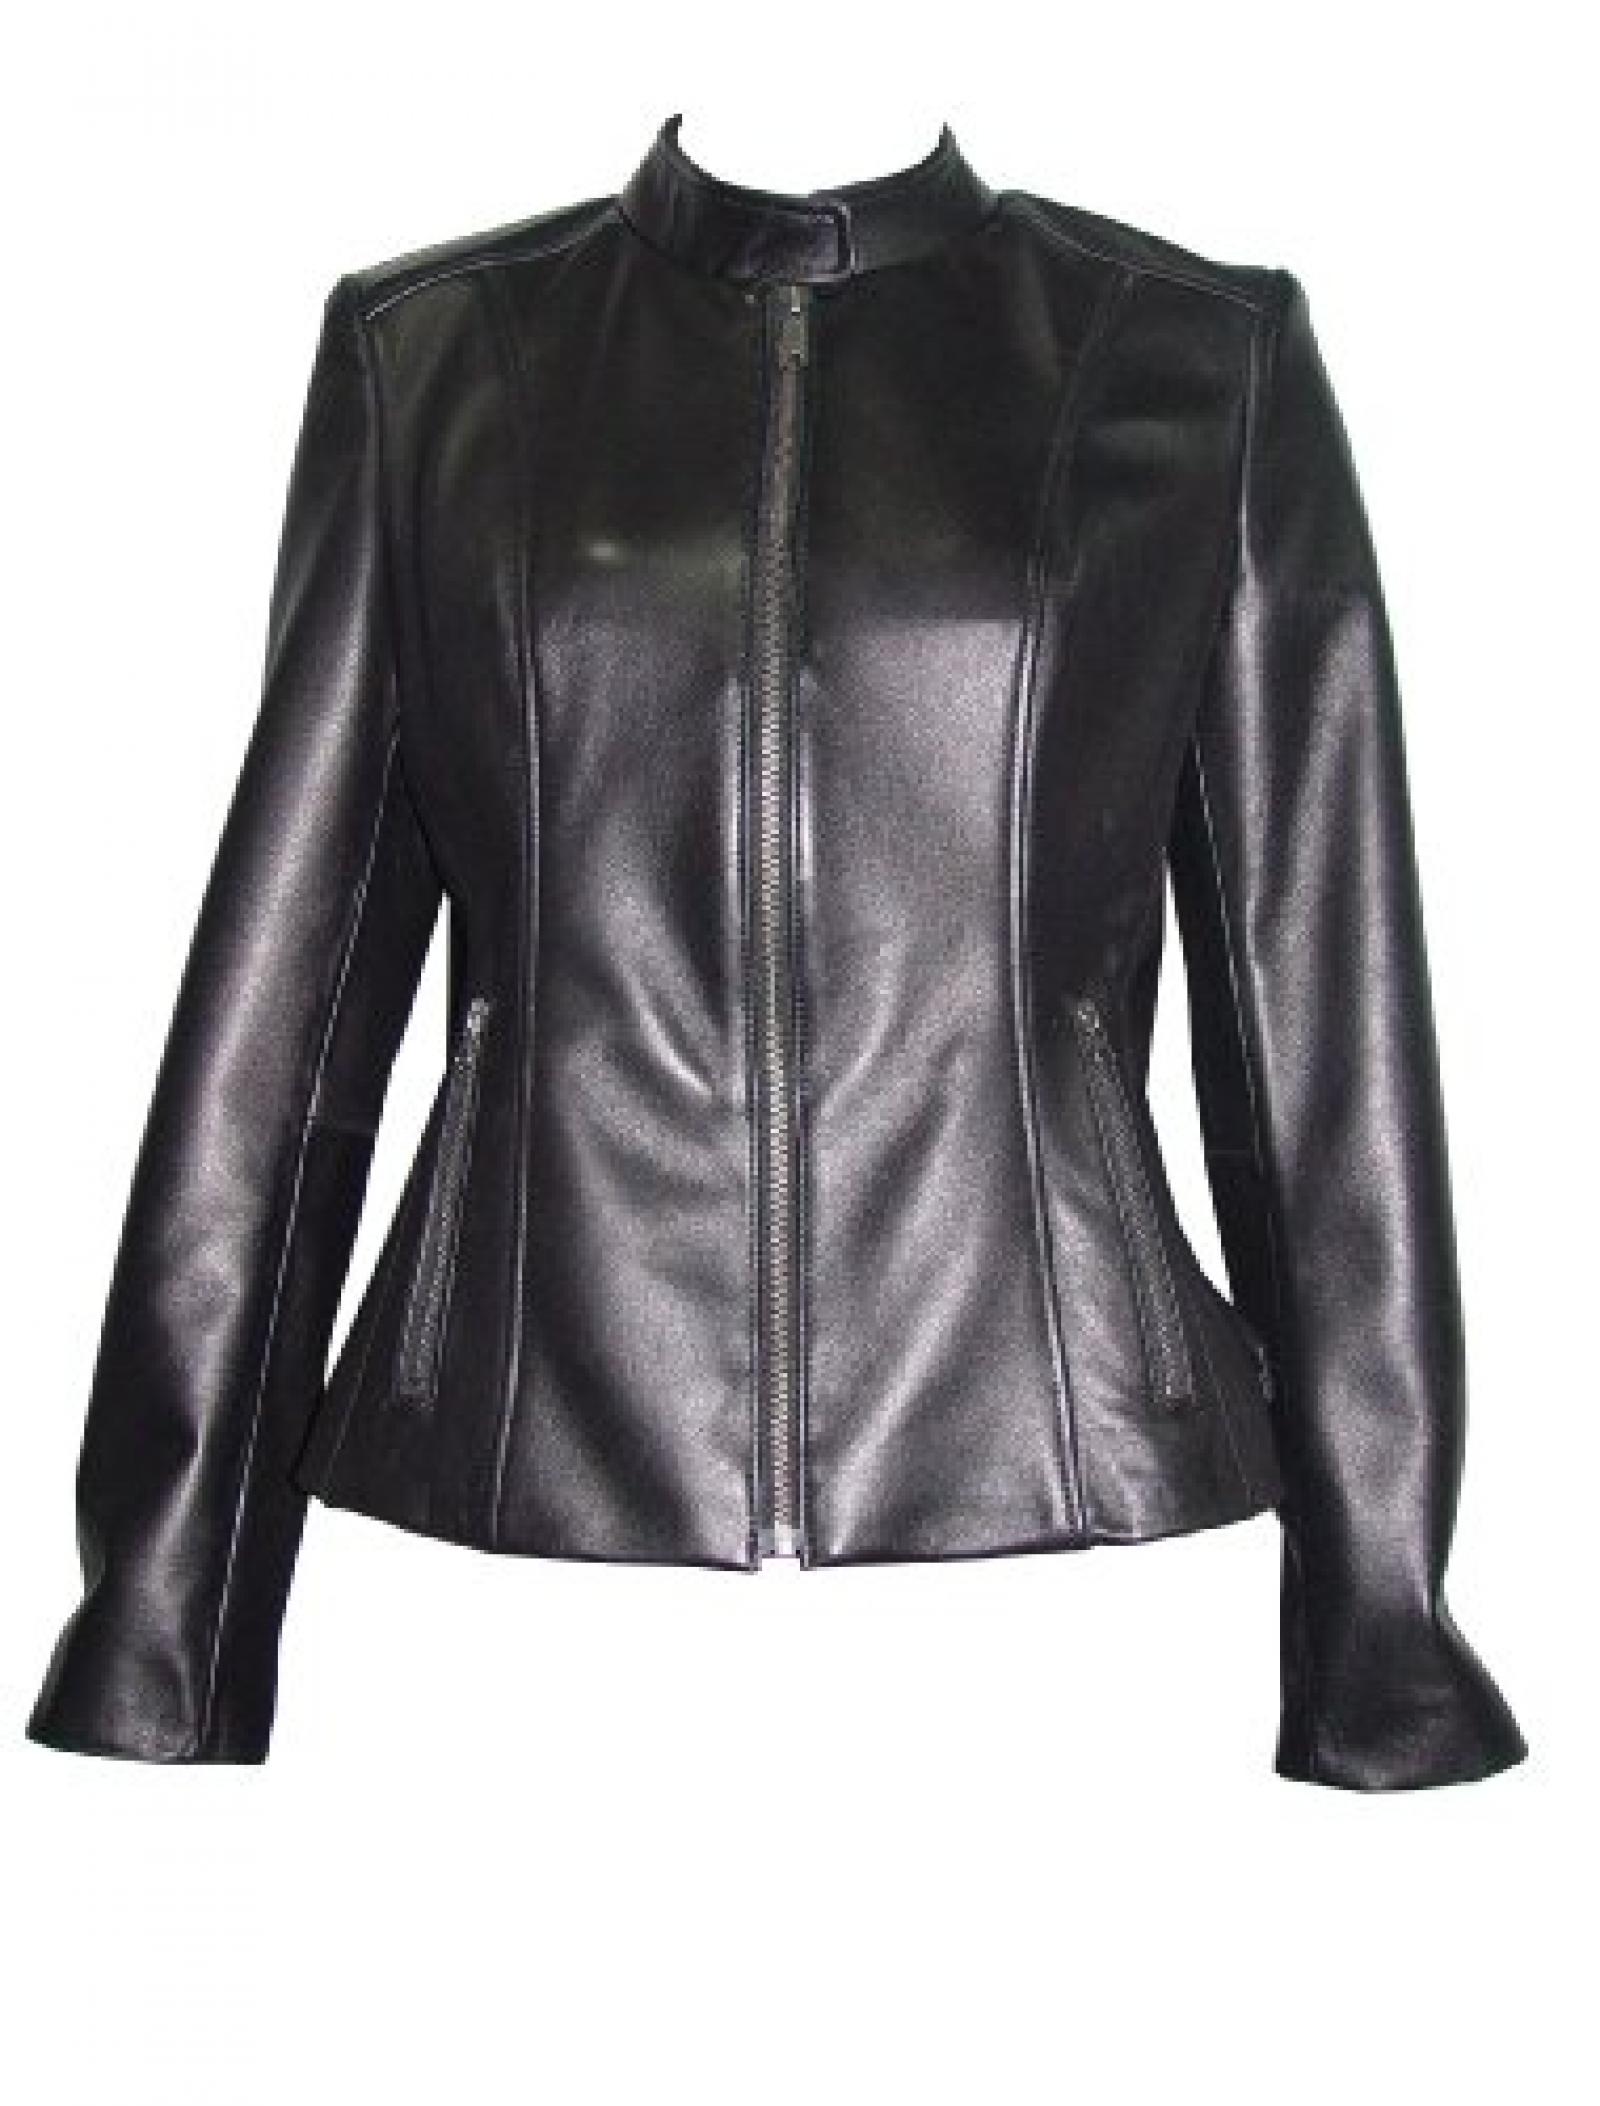 Nettailor Women PETITE SZ 4062 Lamb Leather Moto Jacket 